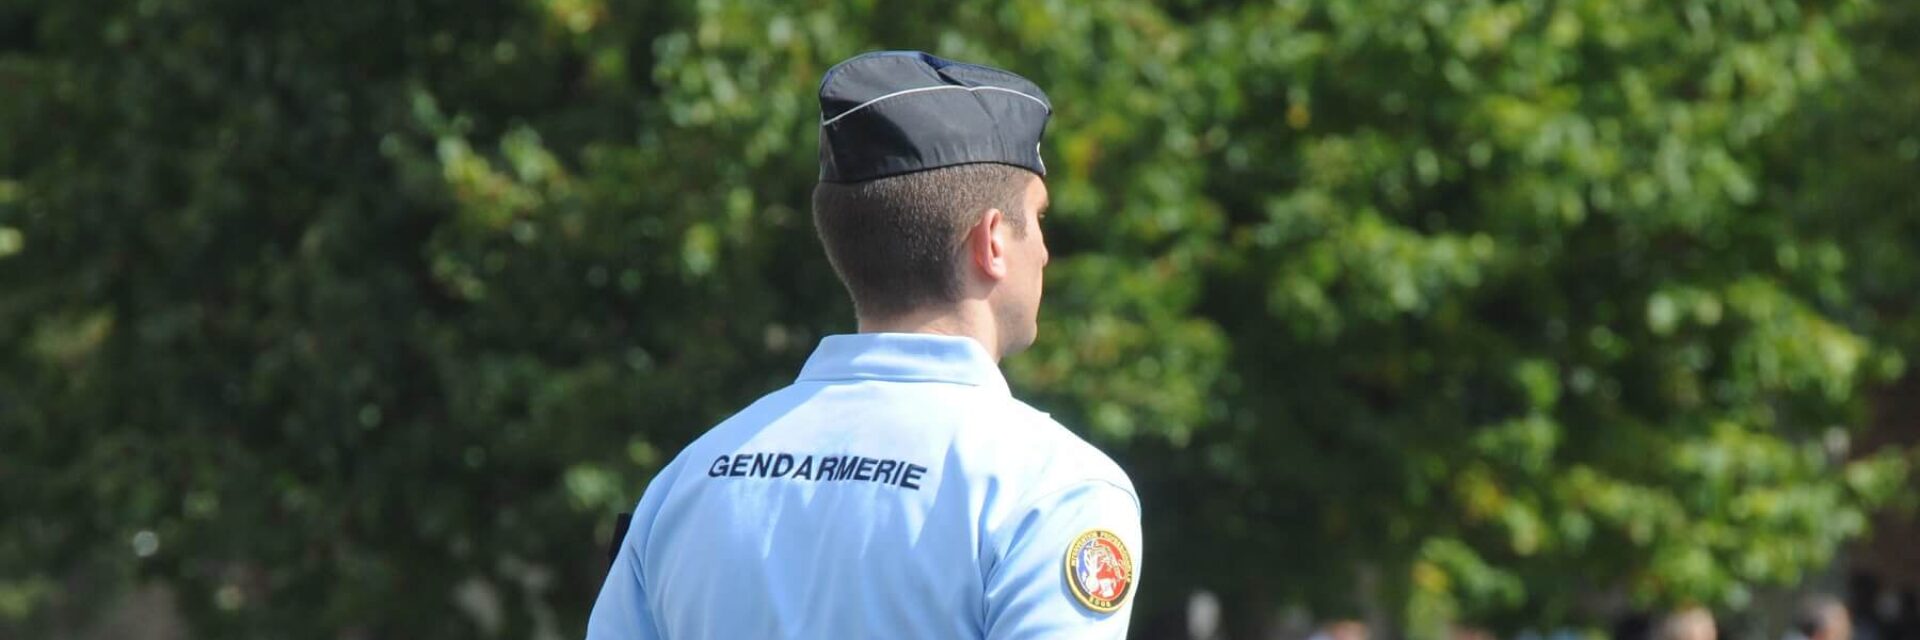 demenagement gendarme